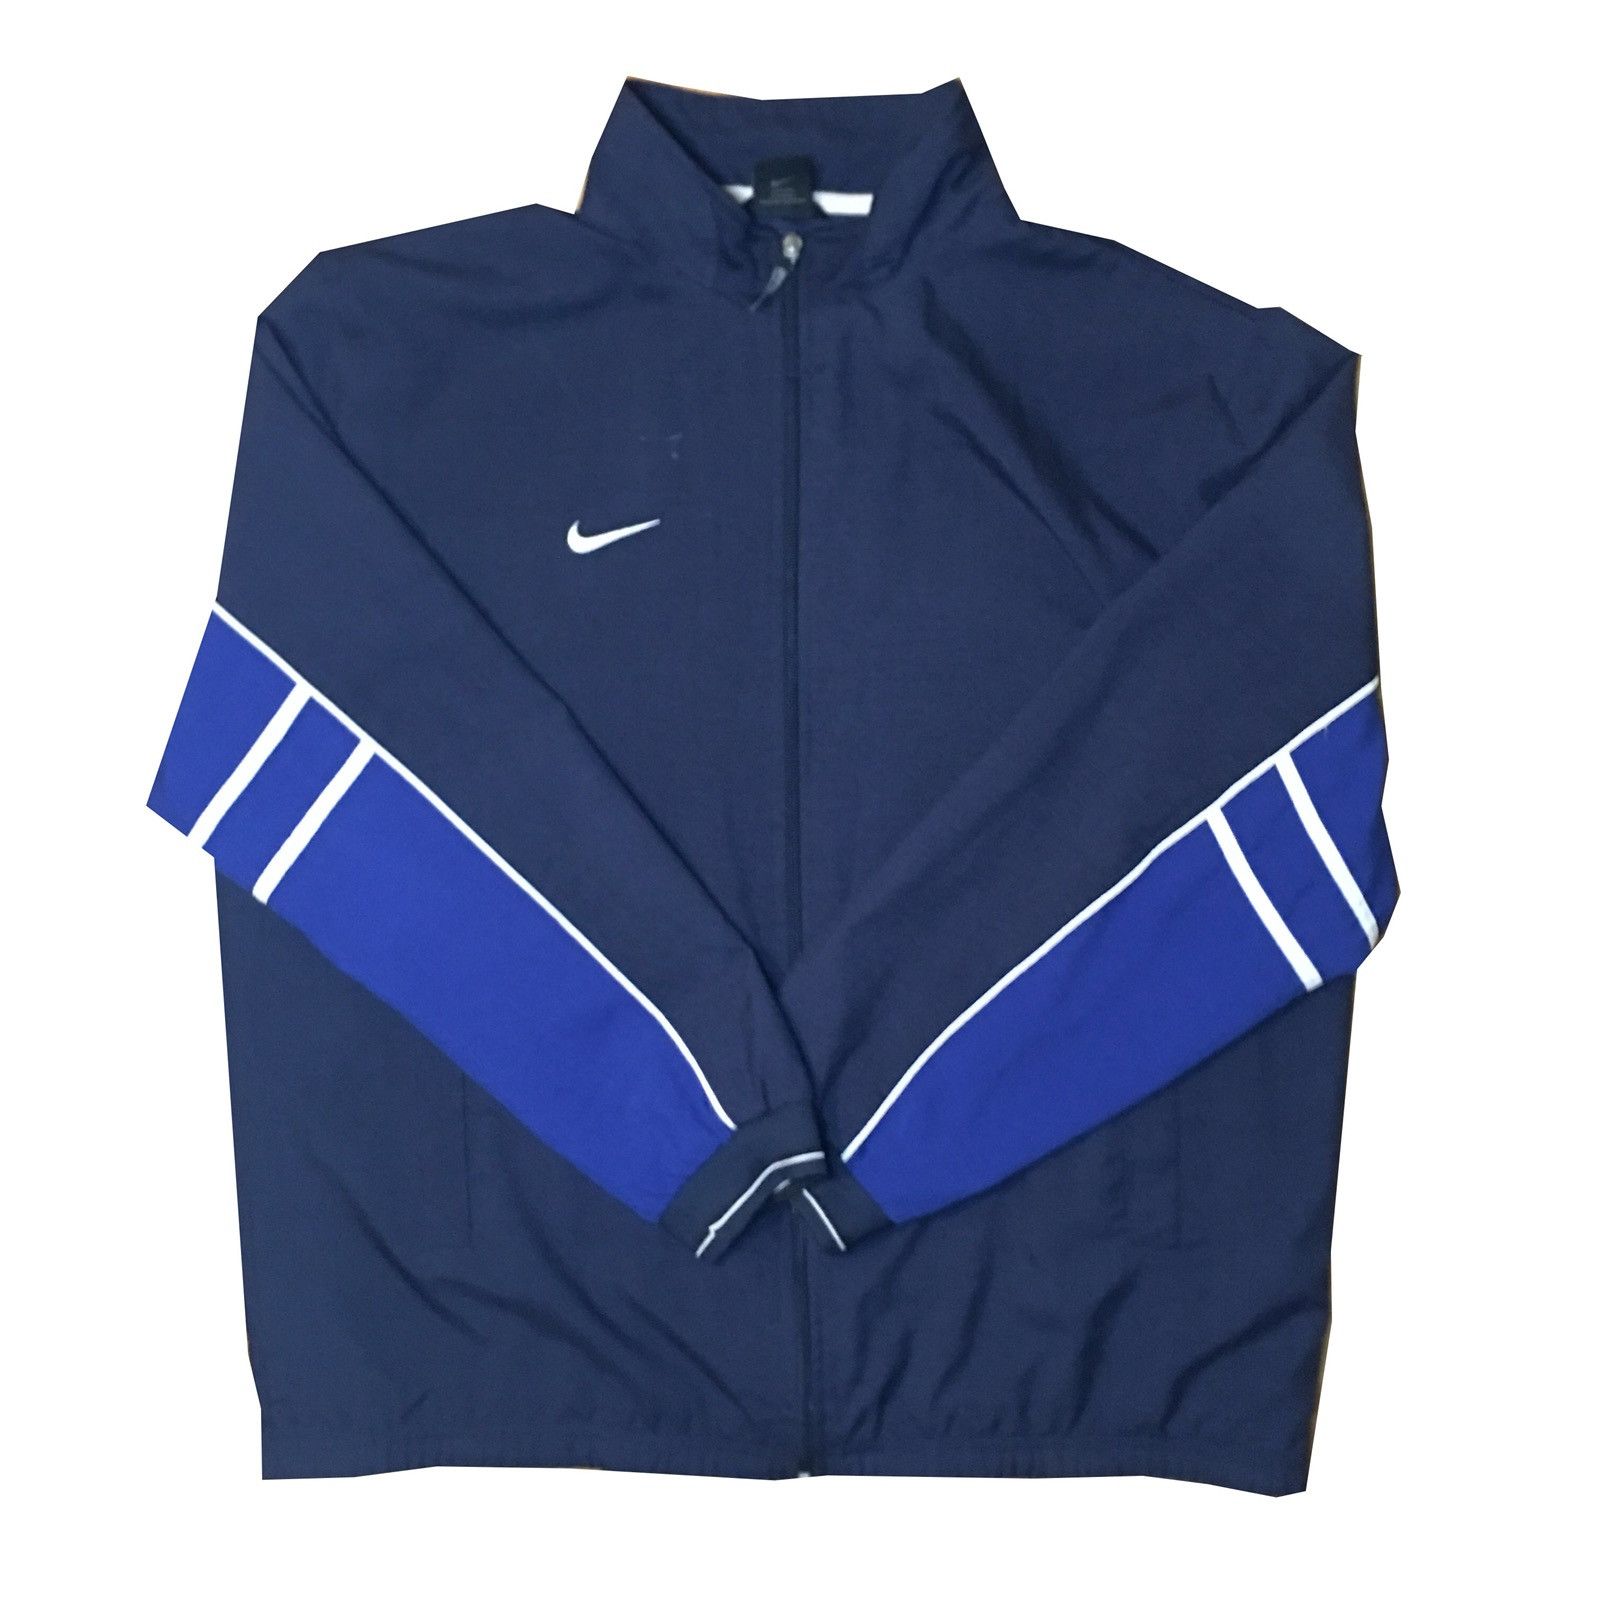 Nike Nike Track Jacket Size US XL / EU 56 / 4 - 1 Preview